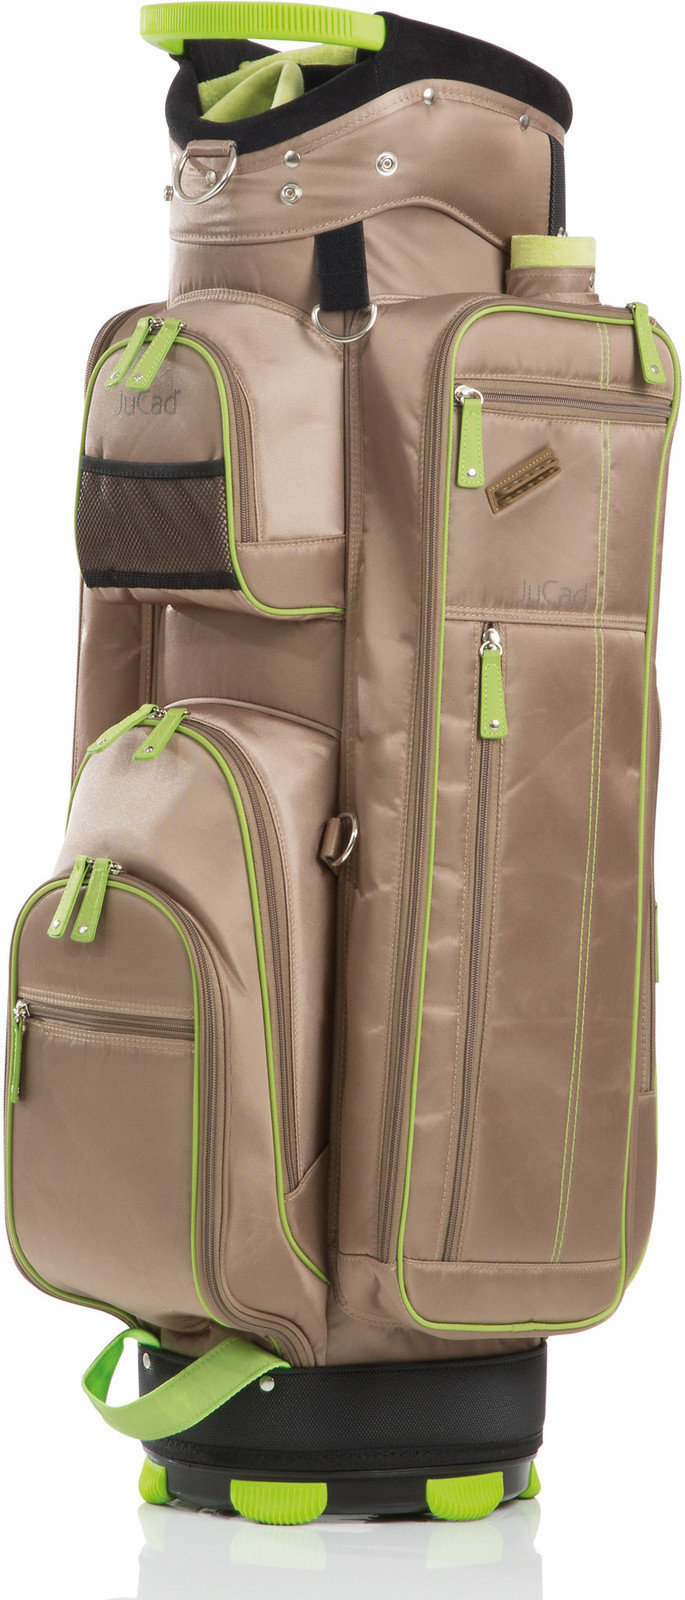 Golf torba Cart Bag Jucad Function Plus Beige/Green Golf torba Cart Bag